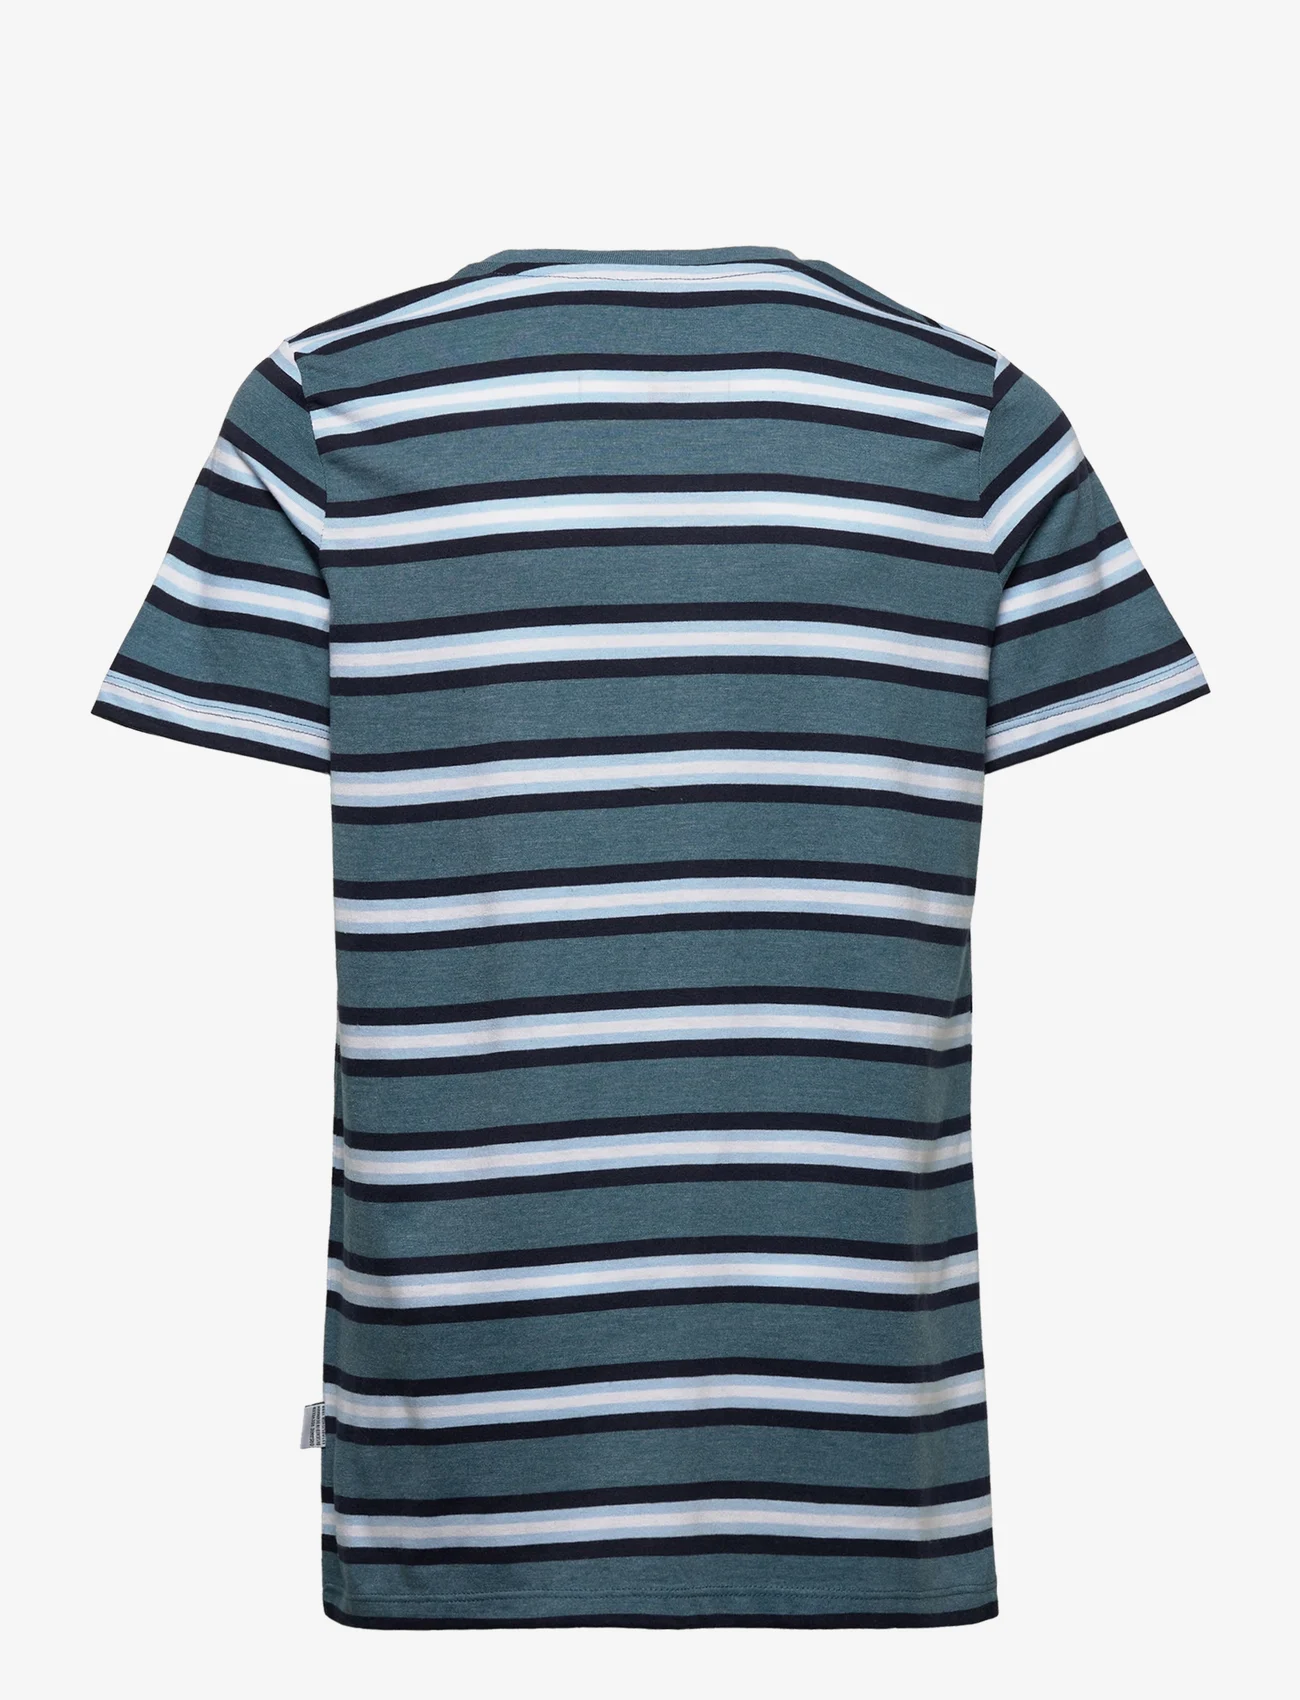 Kronstadt - Johnny Recycled - short-sleeved t-shirts - blue pine/navy/lt.blue - 1